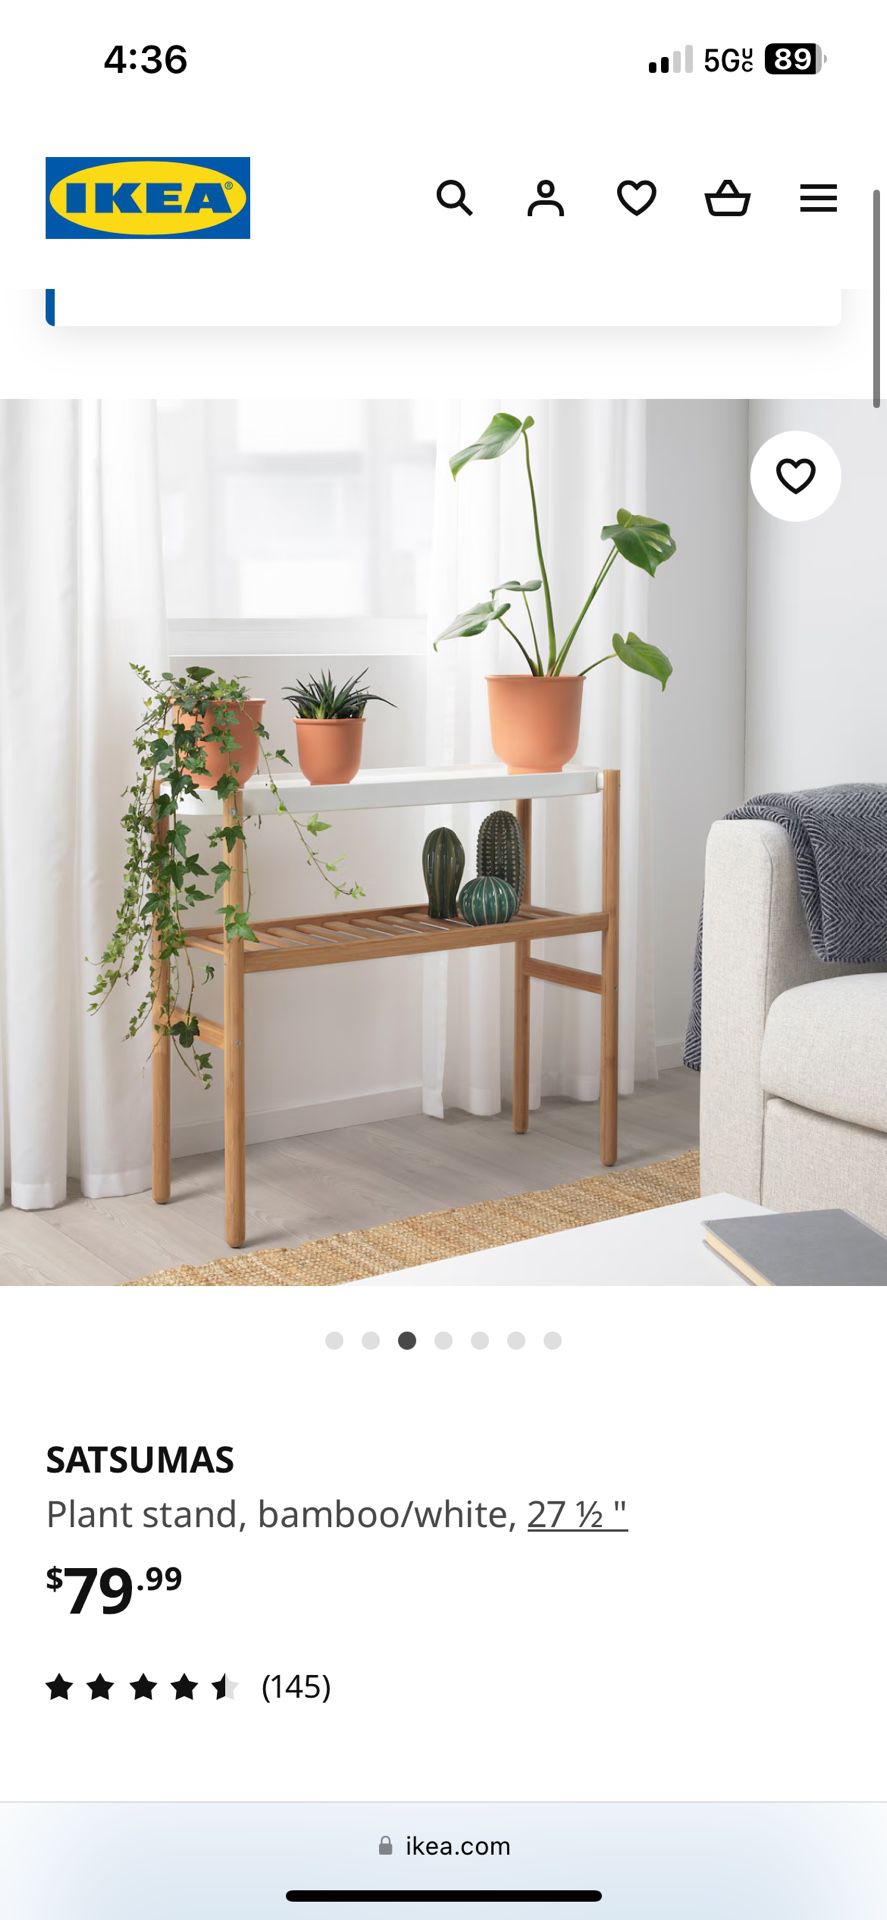 SATSUMAS Plant stand, bamboo/white, IKEA